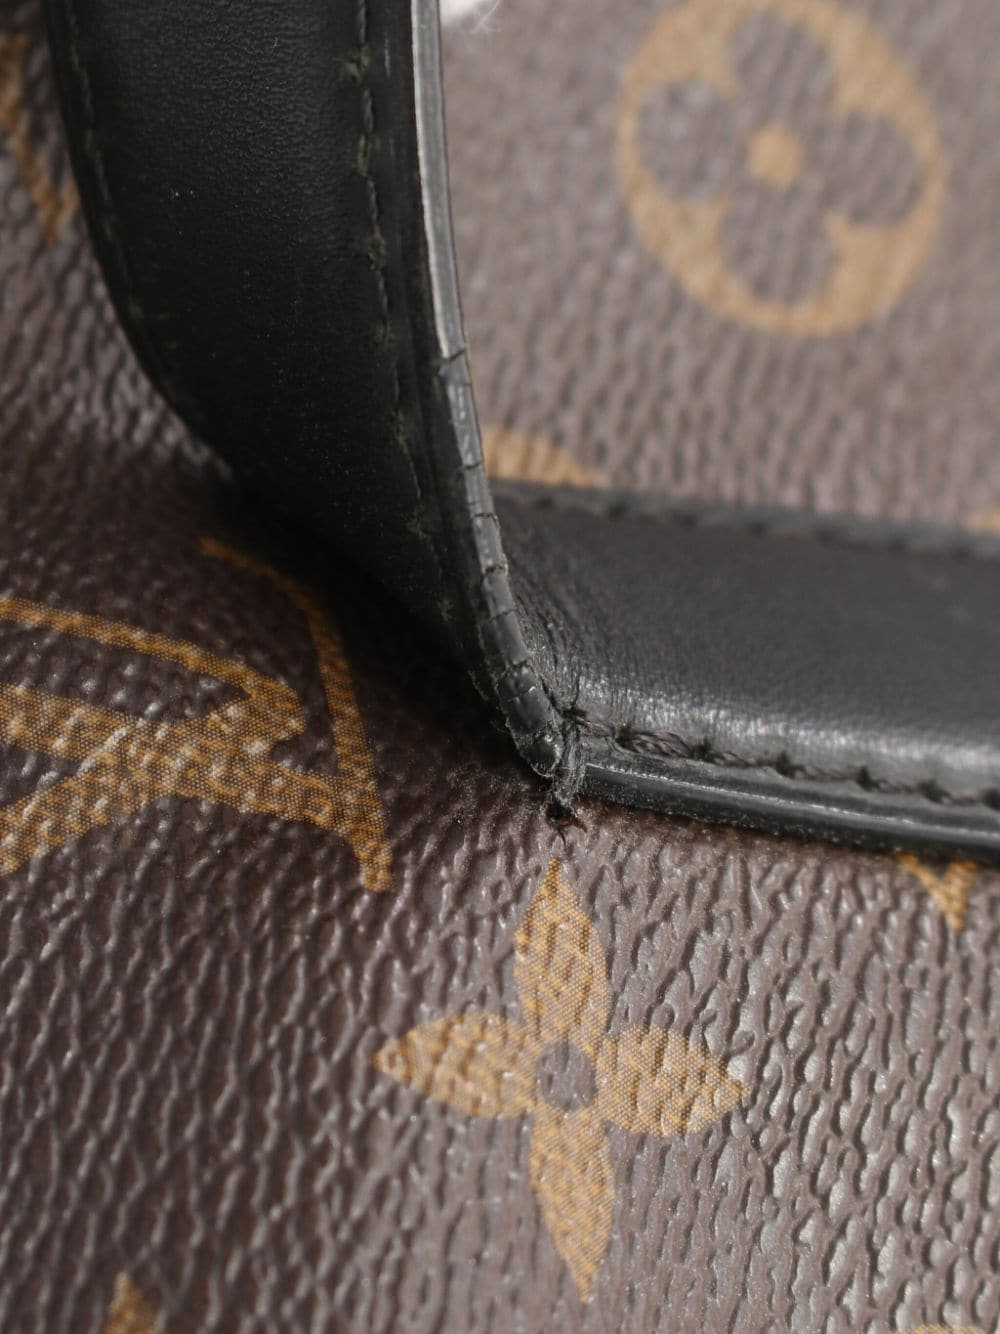 Pre-owned Louis Vuitton 2012 Kitan Two-way Handbag In Brown